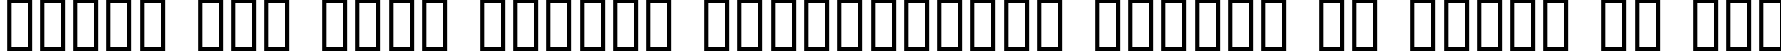 Пример написания шрифтом DreadLox текста на русском